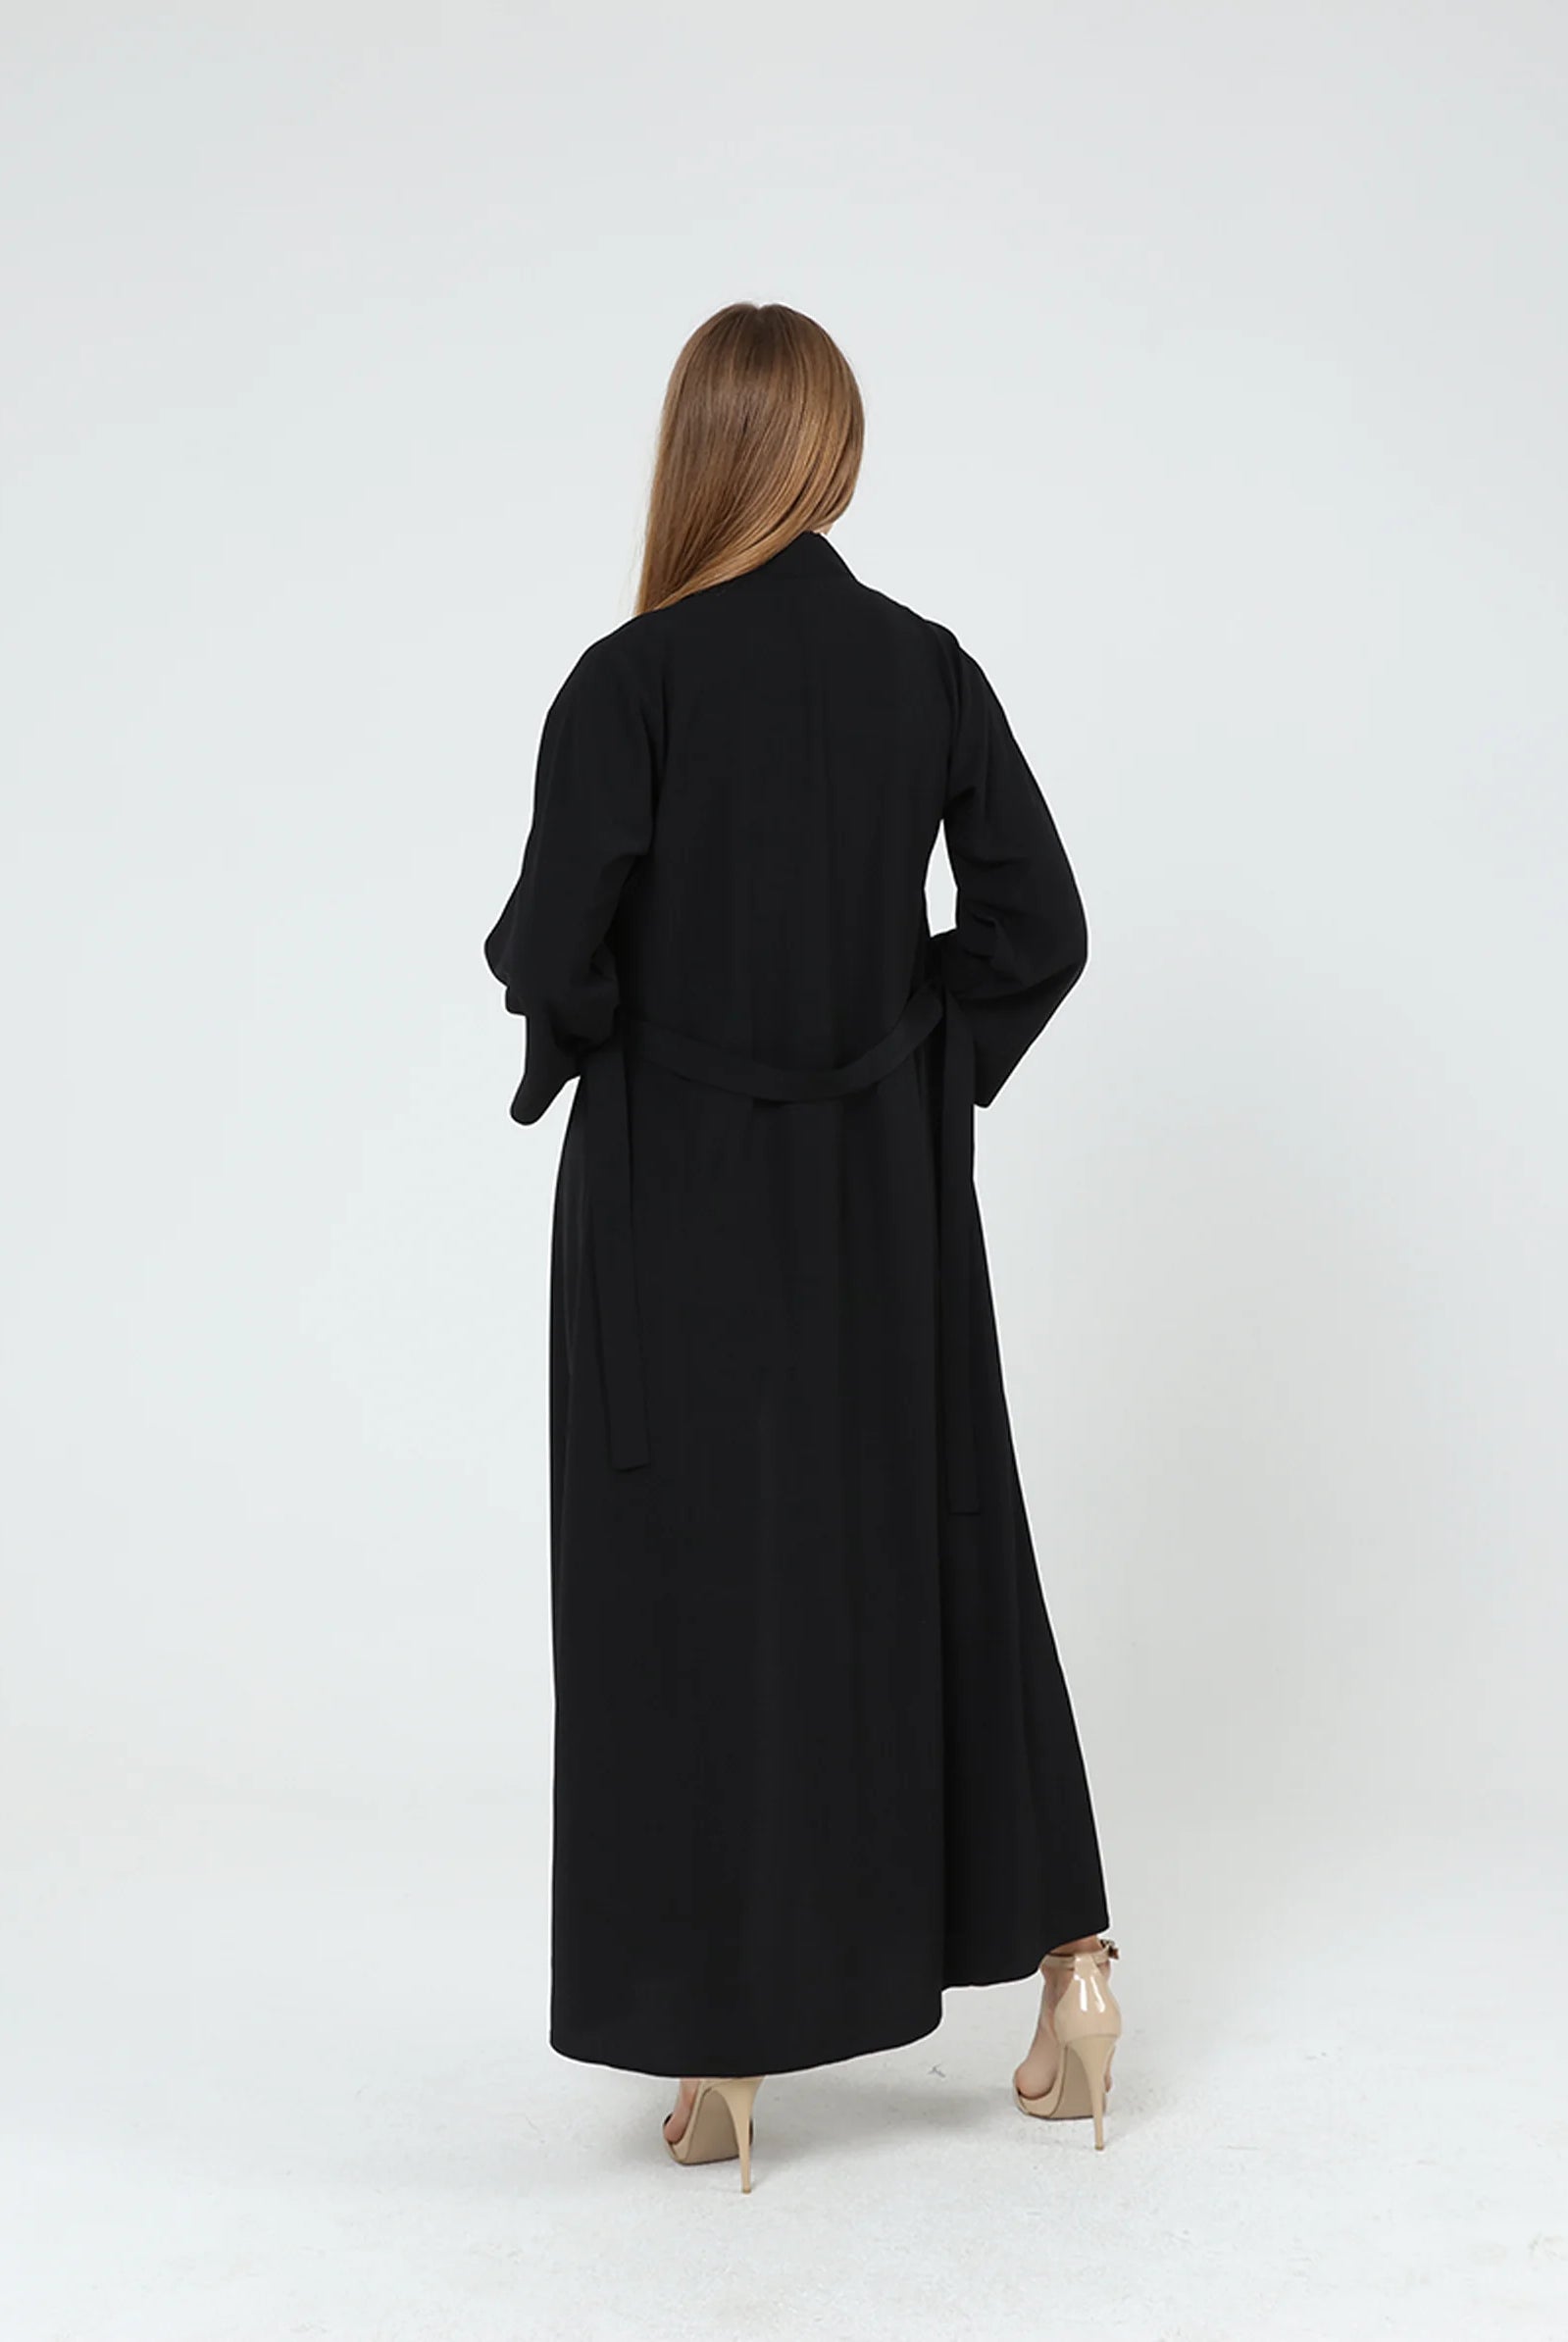 Shop Women's Embroidered Kimonos in black